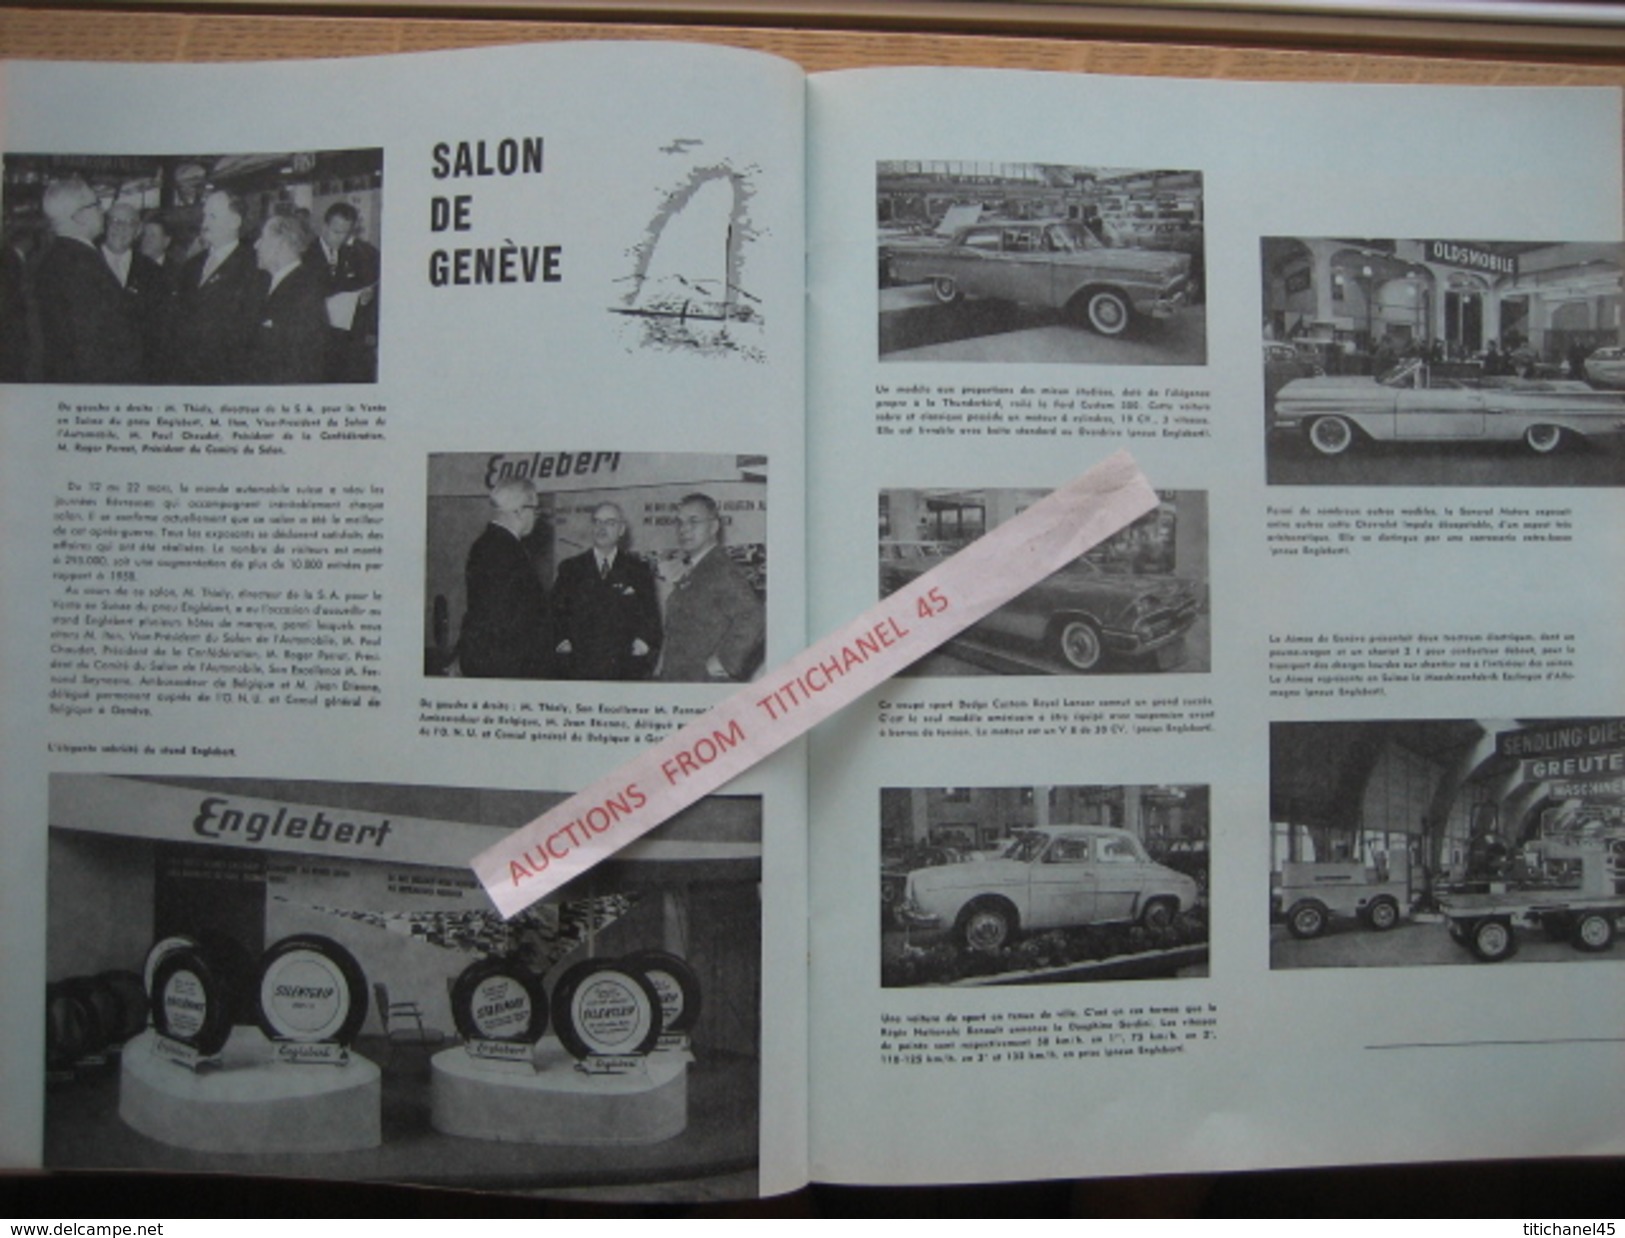 ENGLEBERT MAGAZINE N° 257 - 1959 -STIRLING MOSS-VON TRIPS-GENDEBIEN-HAWTHORN-PETER COLLINS- Salon de GENEVE